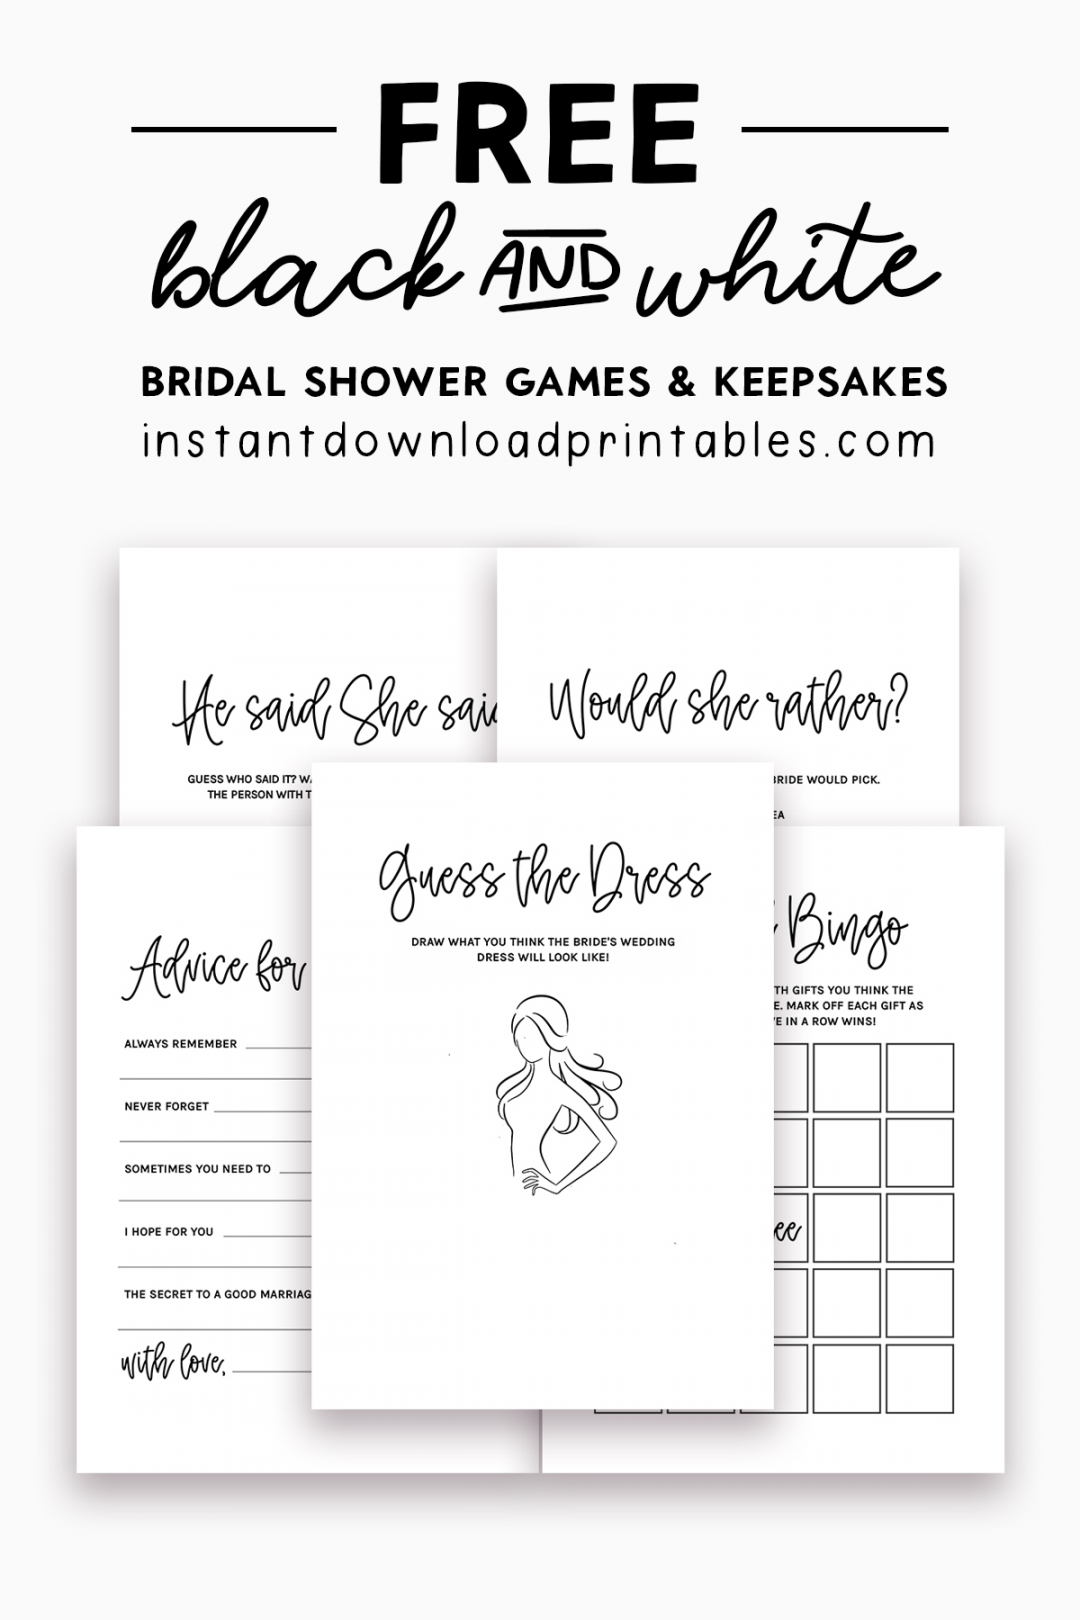 Bridal Shower Games Free Printable - Printable - Free Bridal Shower Games and Keepsakes Printables - Black and